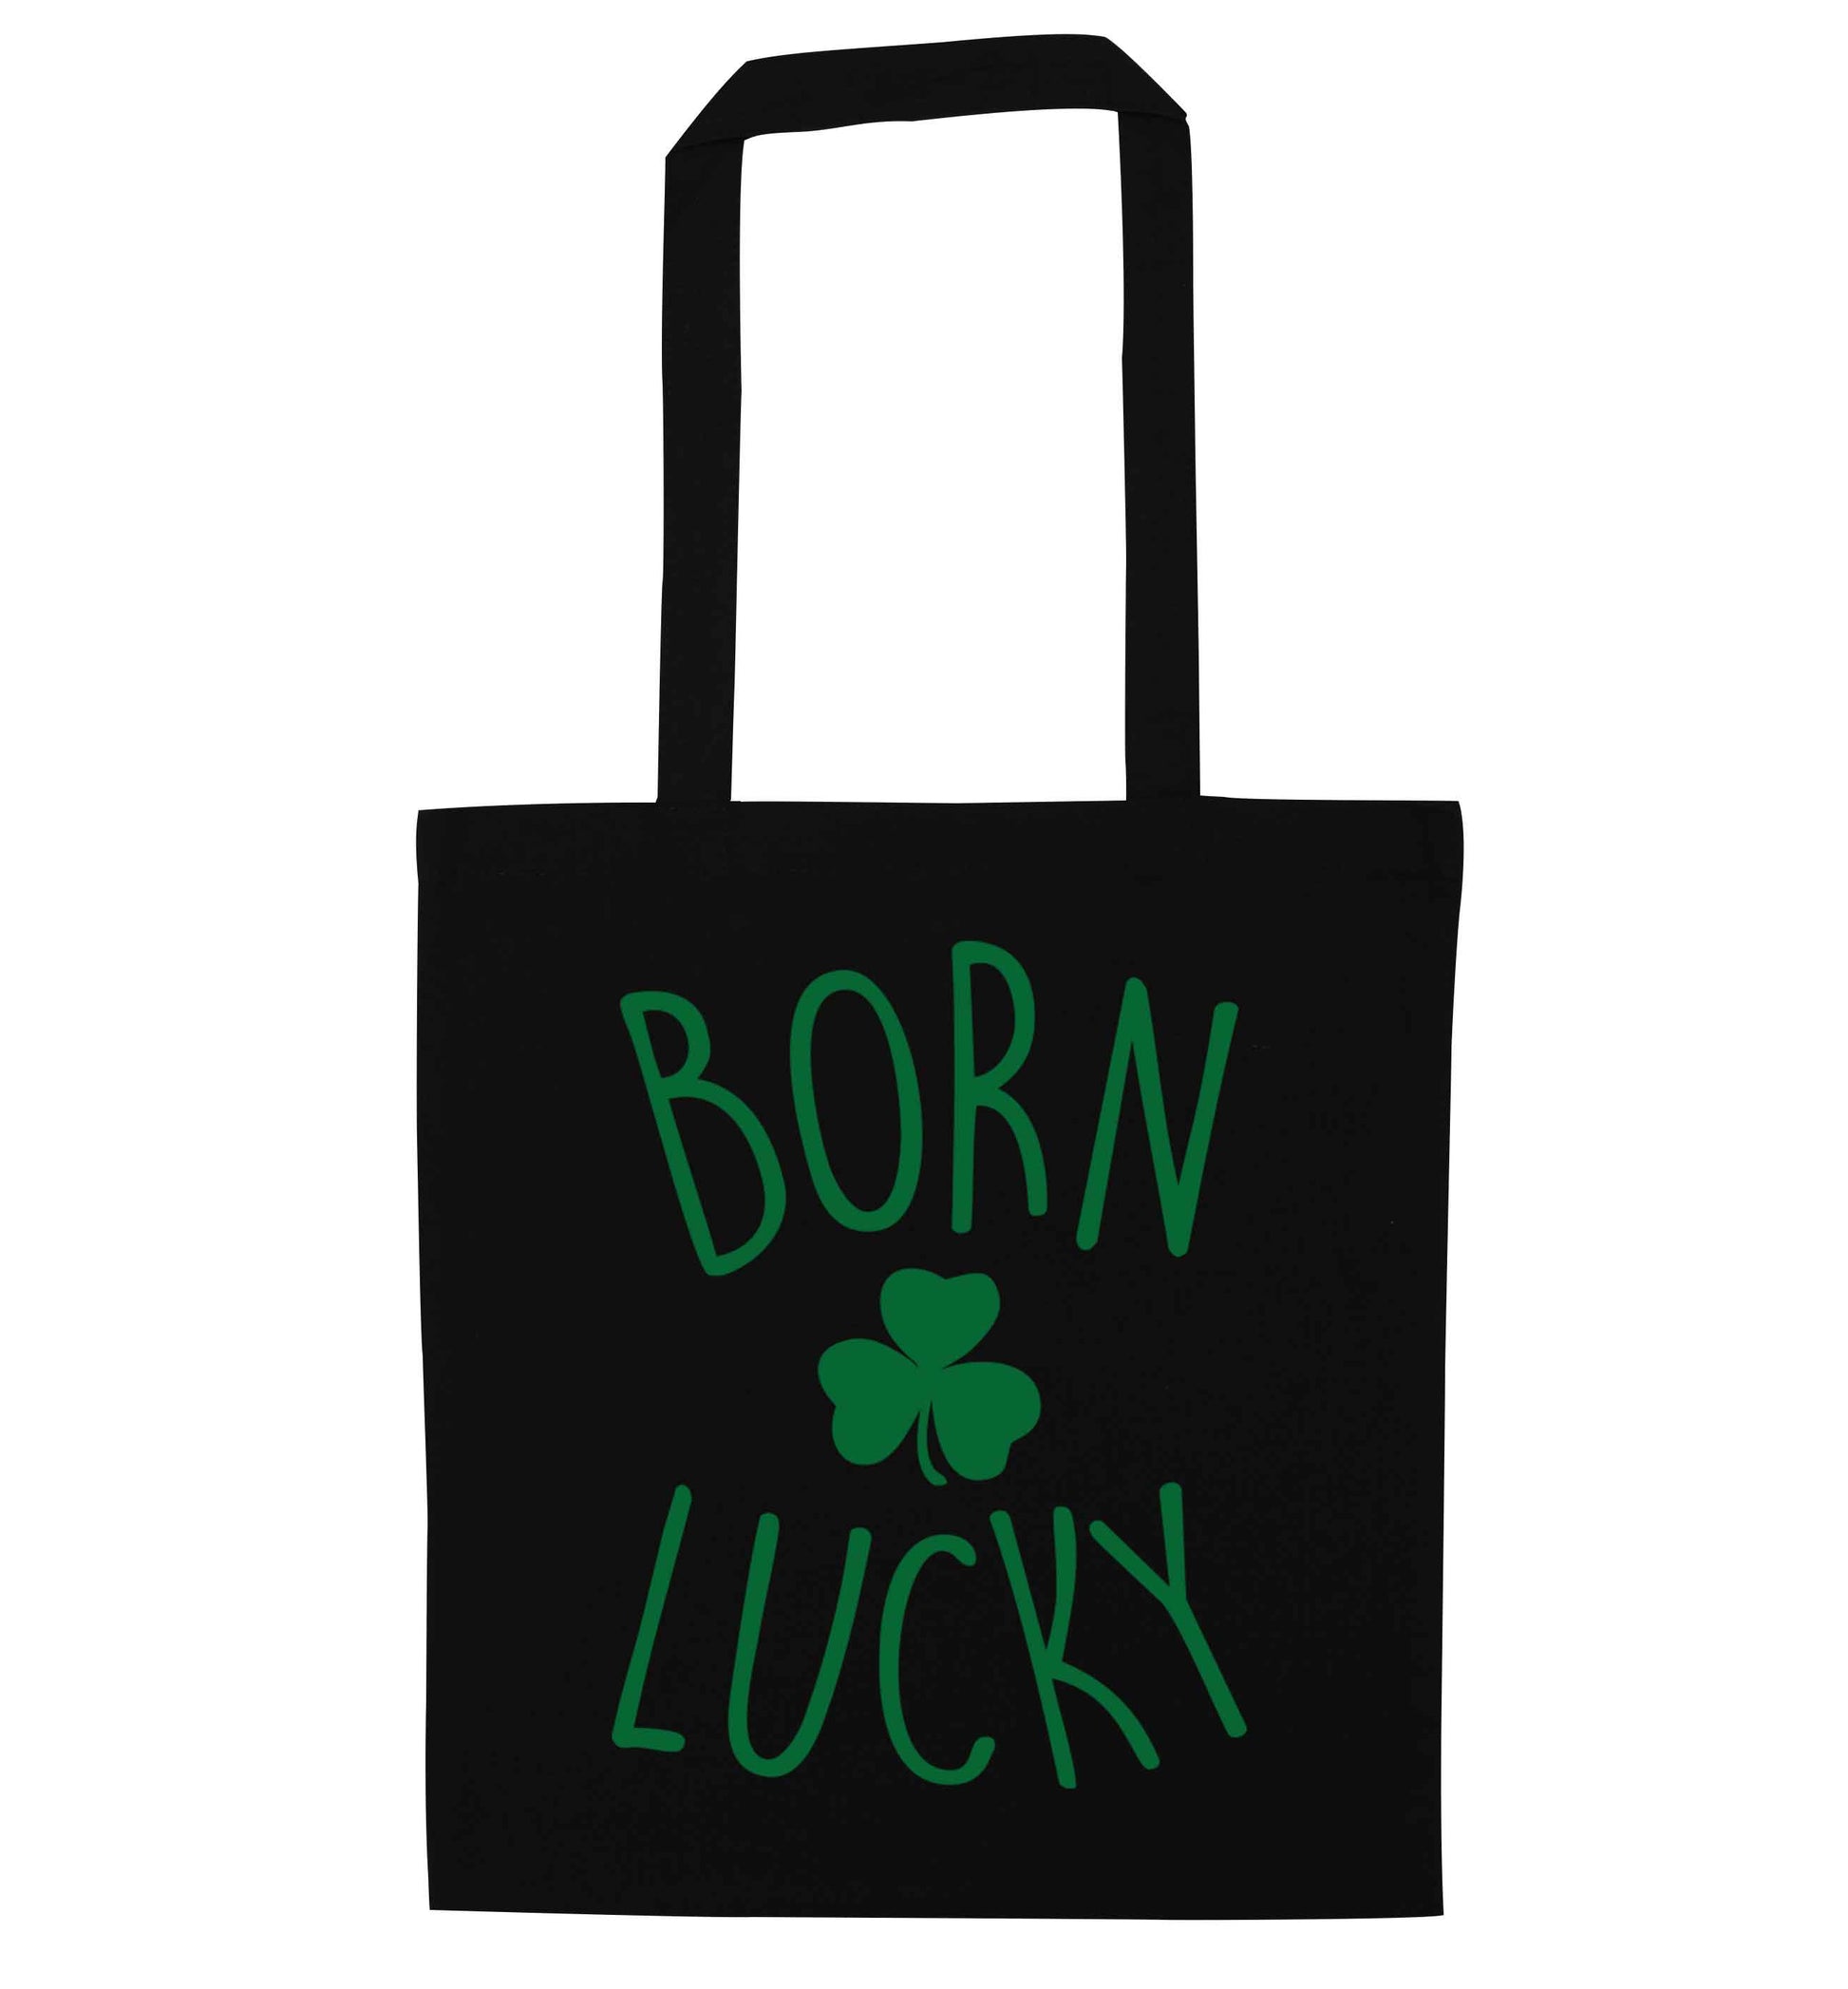  Born Lucky black tote bag